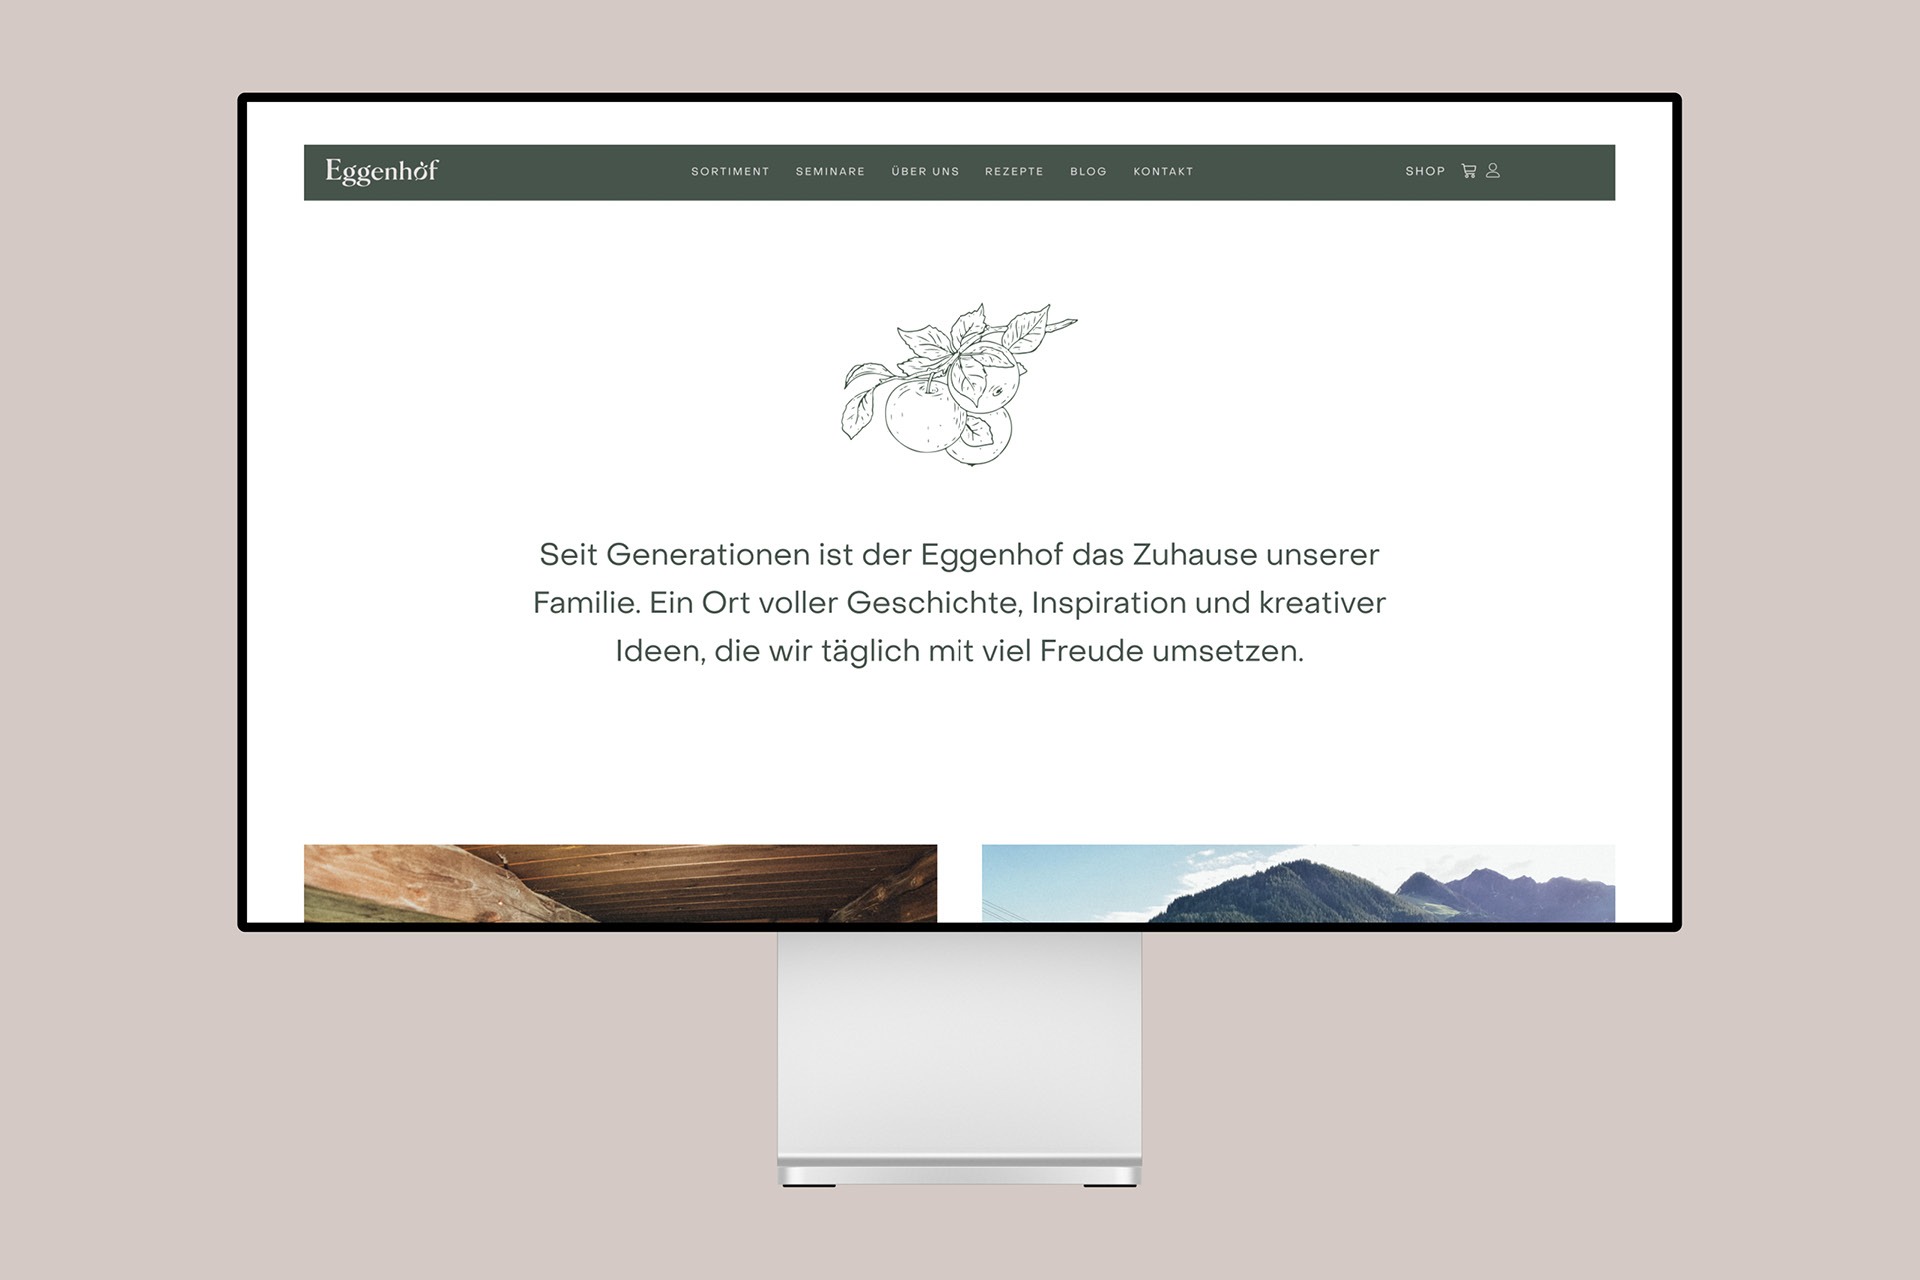 A computer screen displaying the Eggenhof website design.